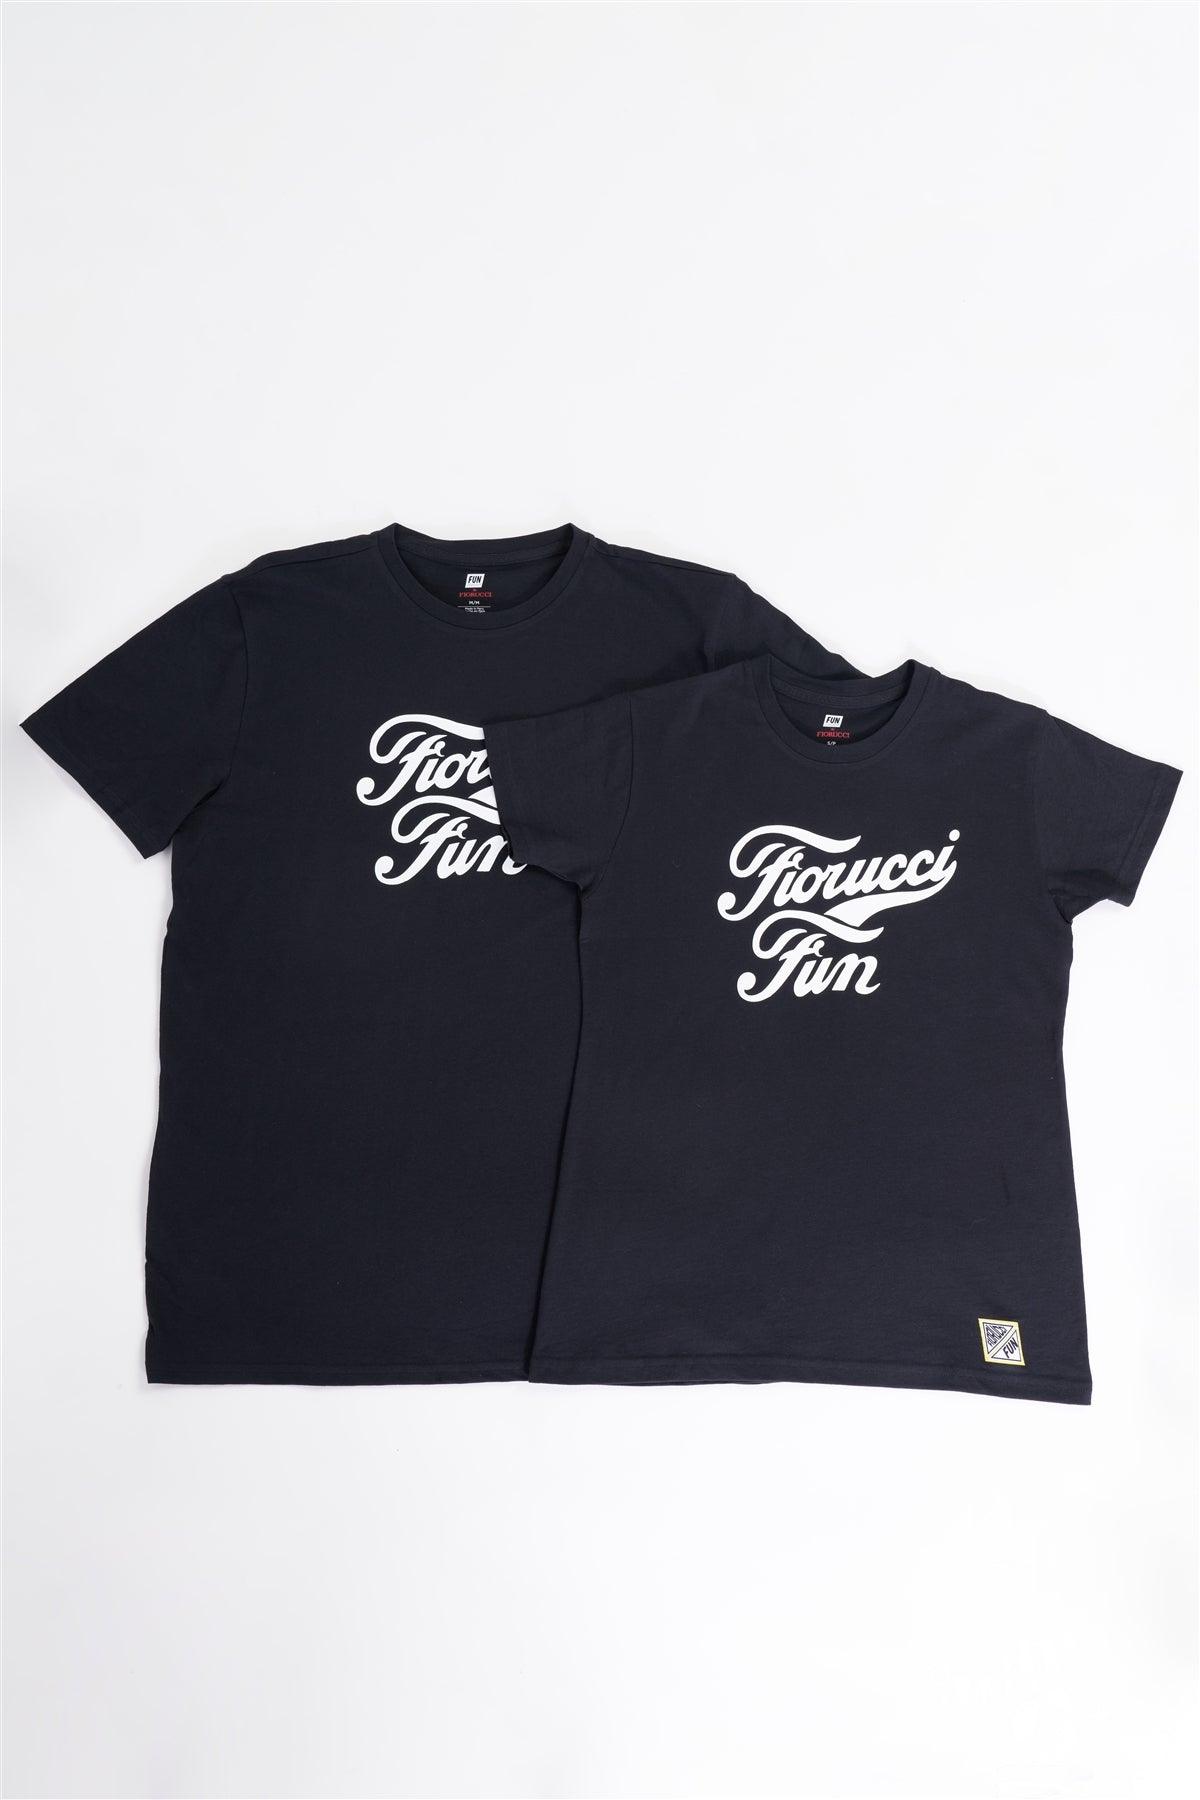 Fiorucci Fun Men's Black & White Printed Logo T-Shirt For Him /2-2-2